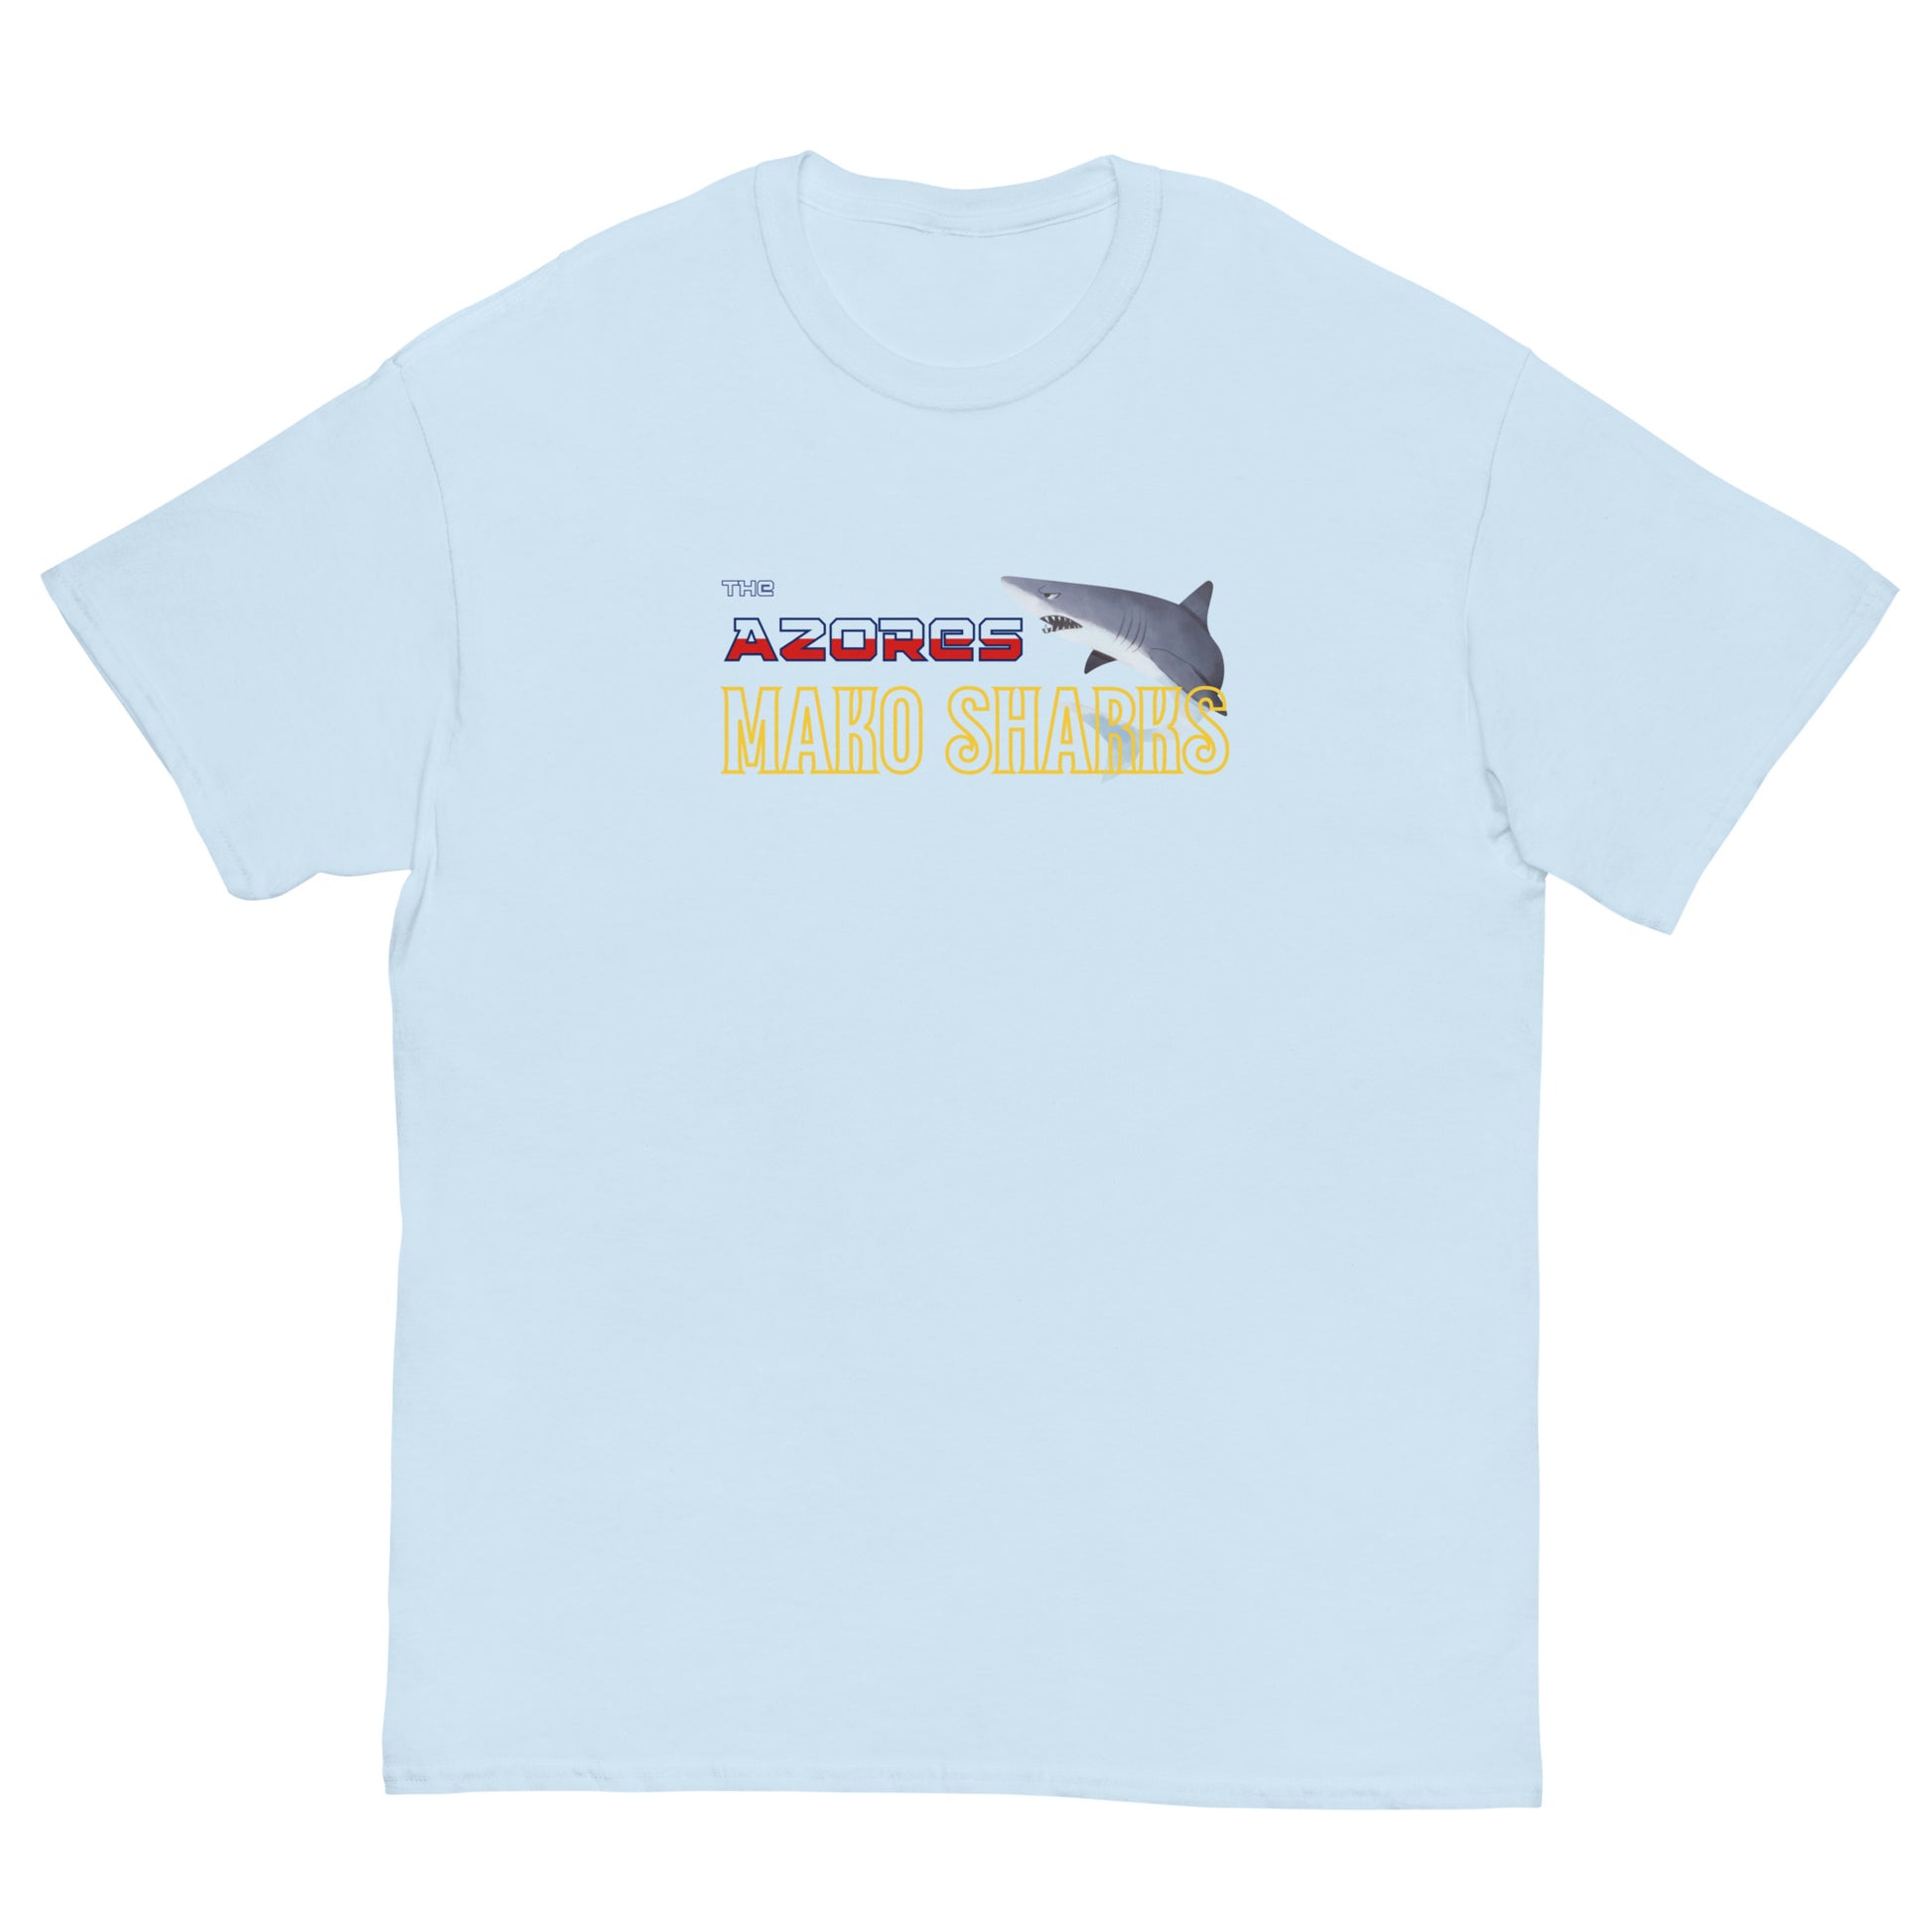 Azores Mako Sharks T-Shirts light blue